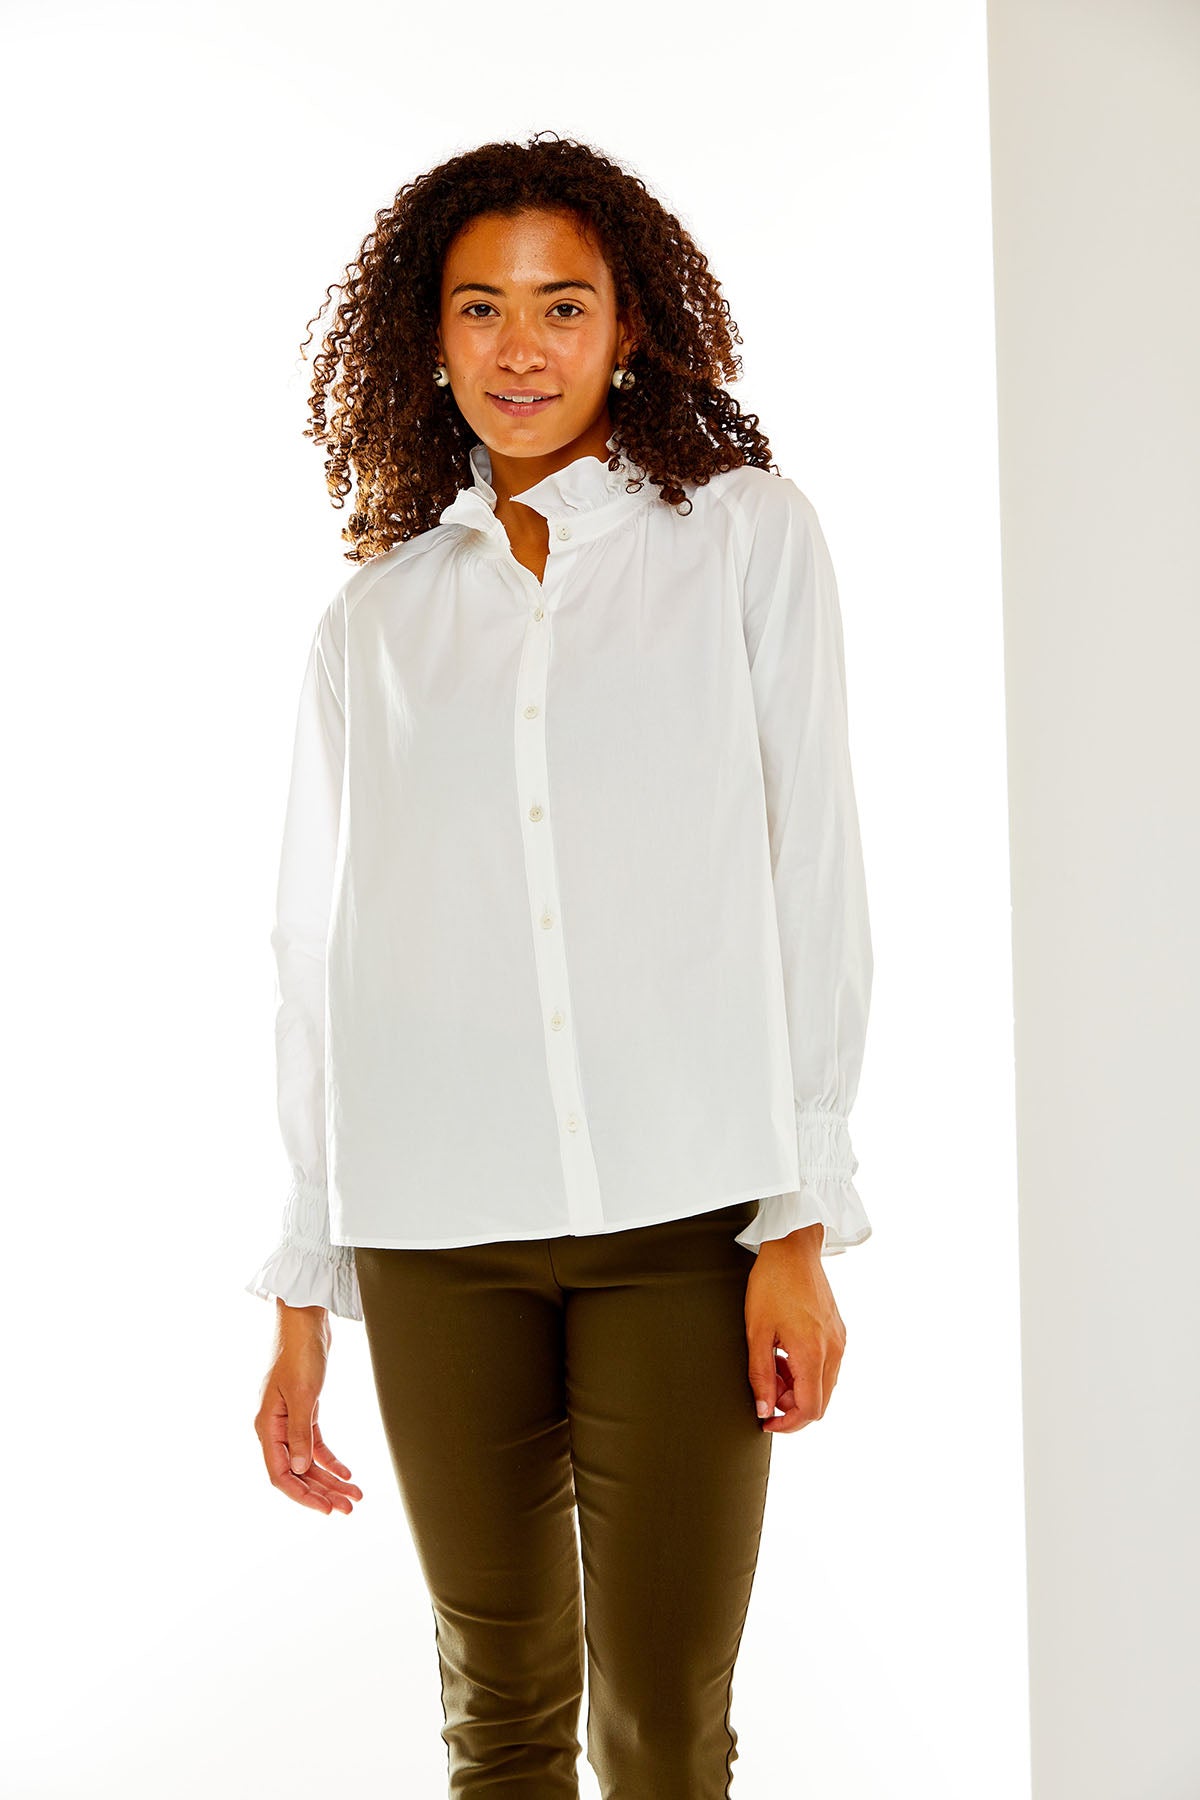 Woman in white button down shirt